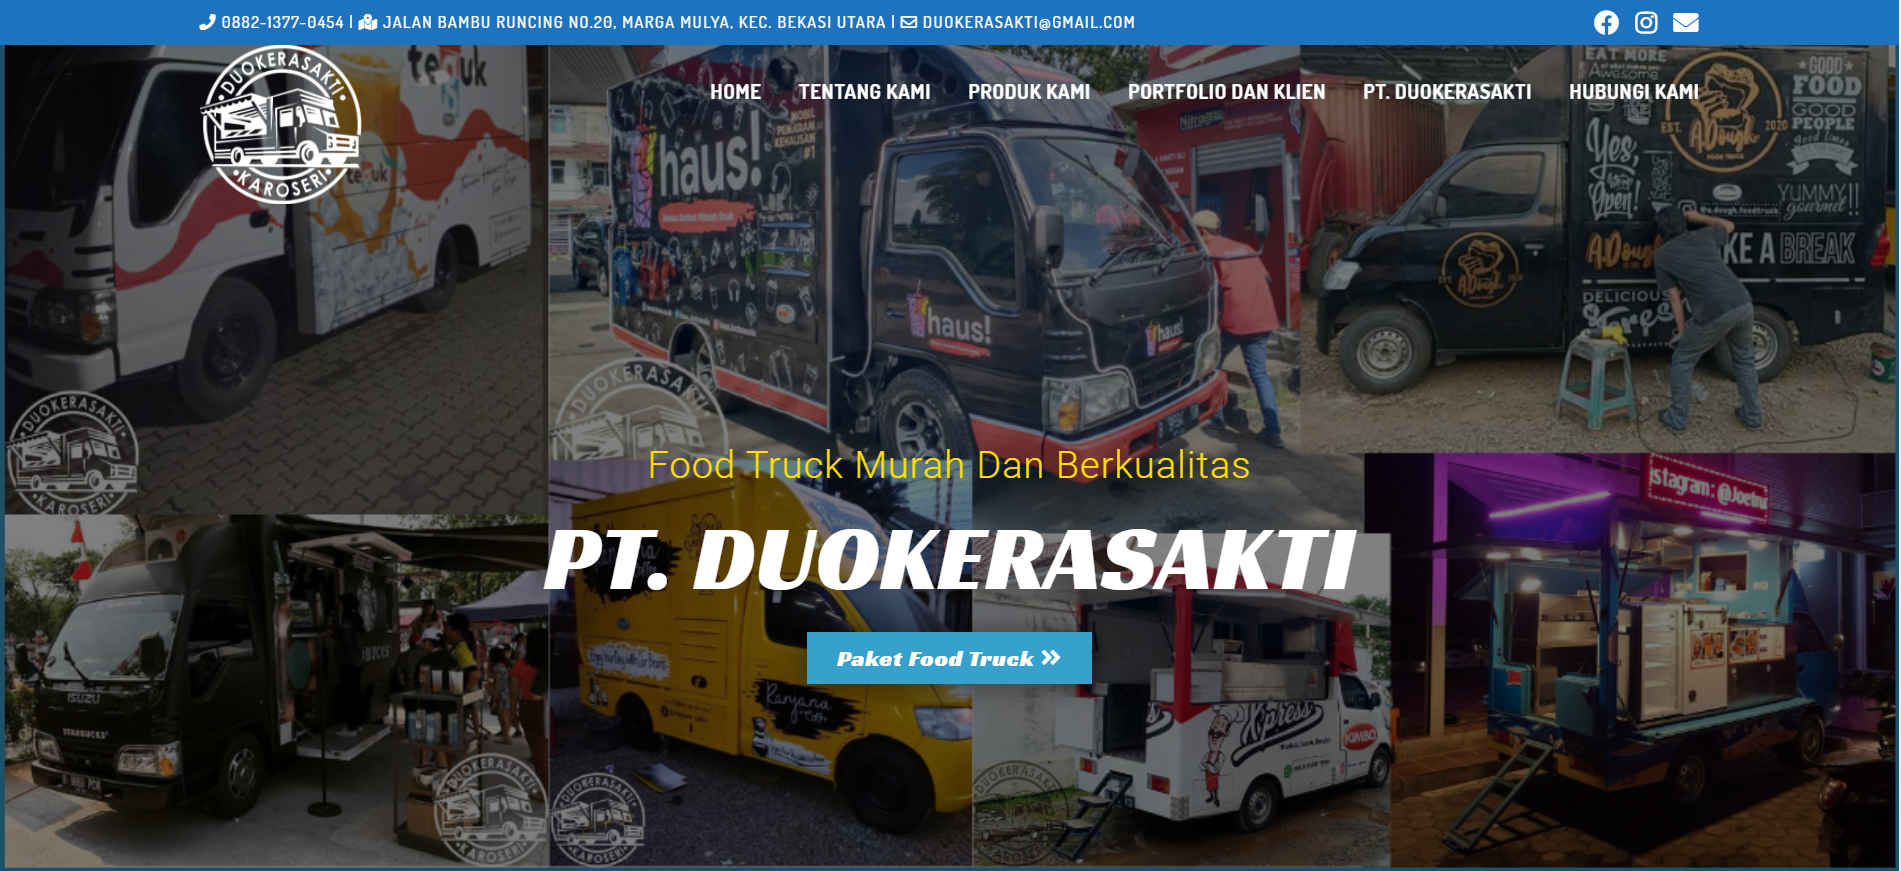 PT Duokerasakti Food Truck Murah Berkualitas by webyourday